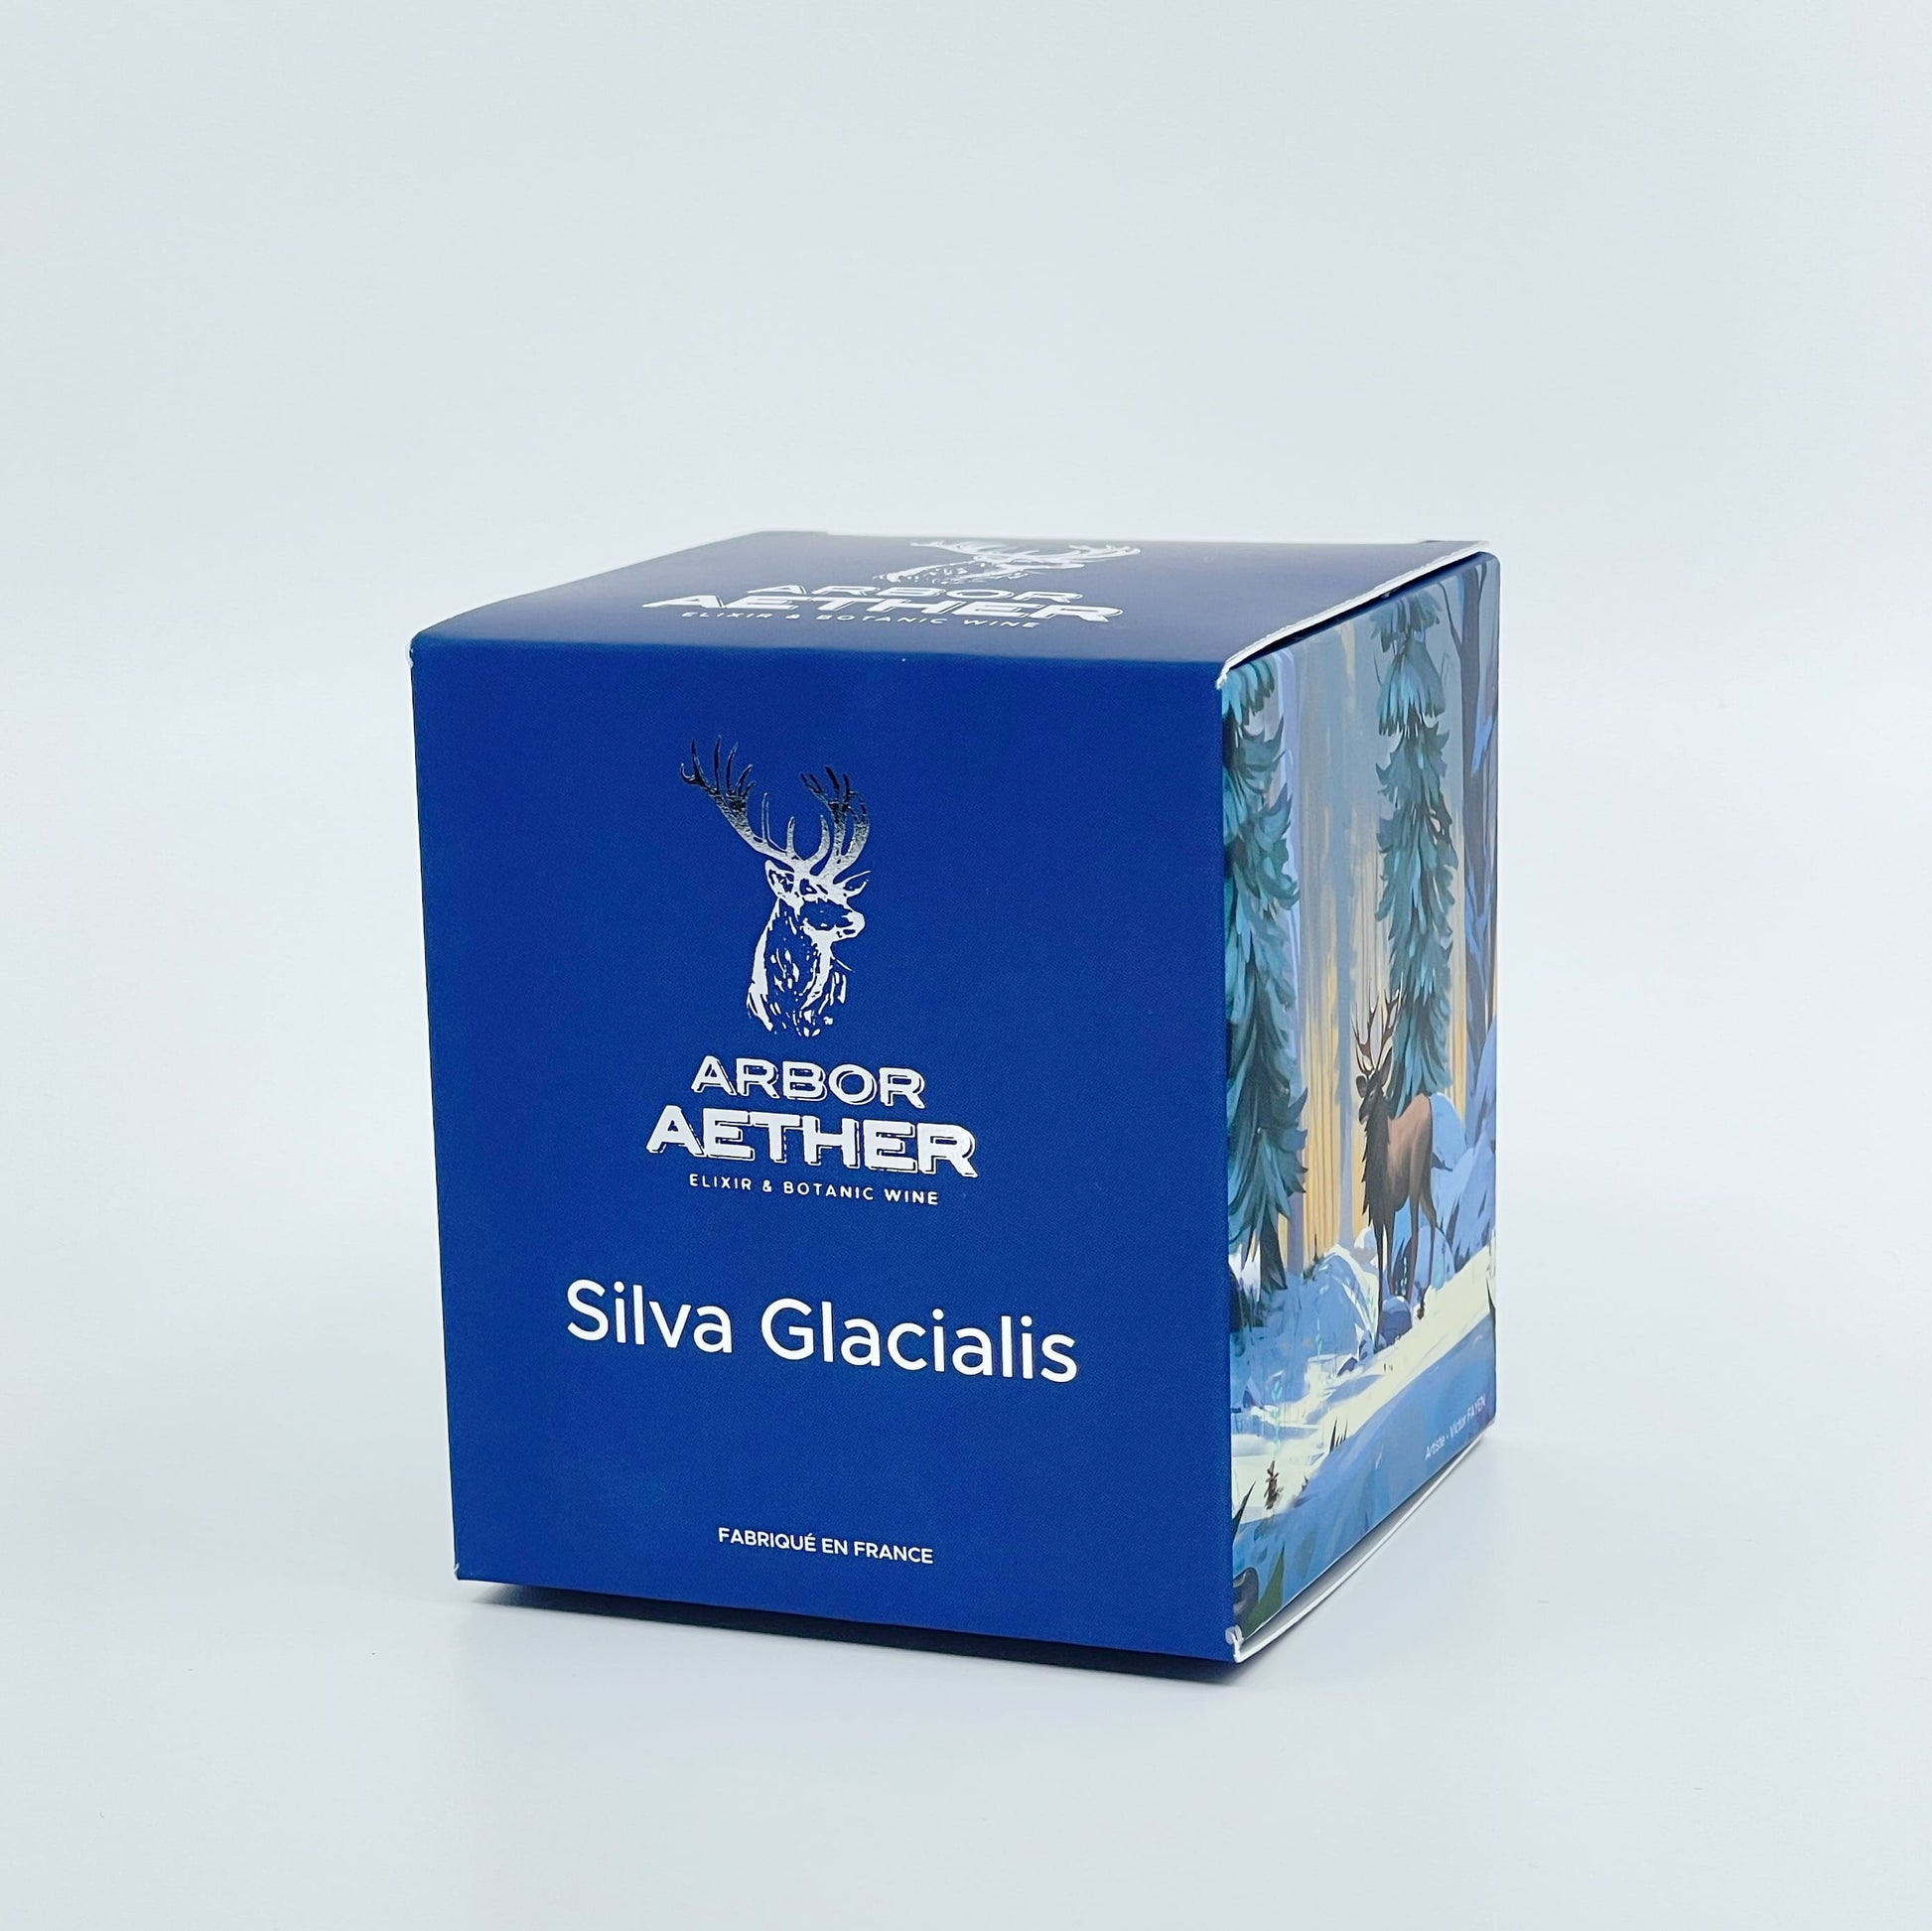 packaging silva glacialis